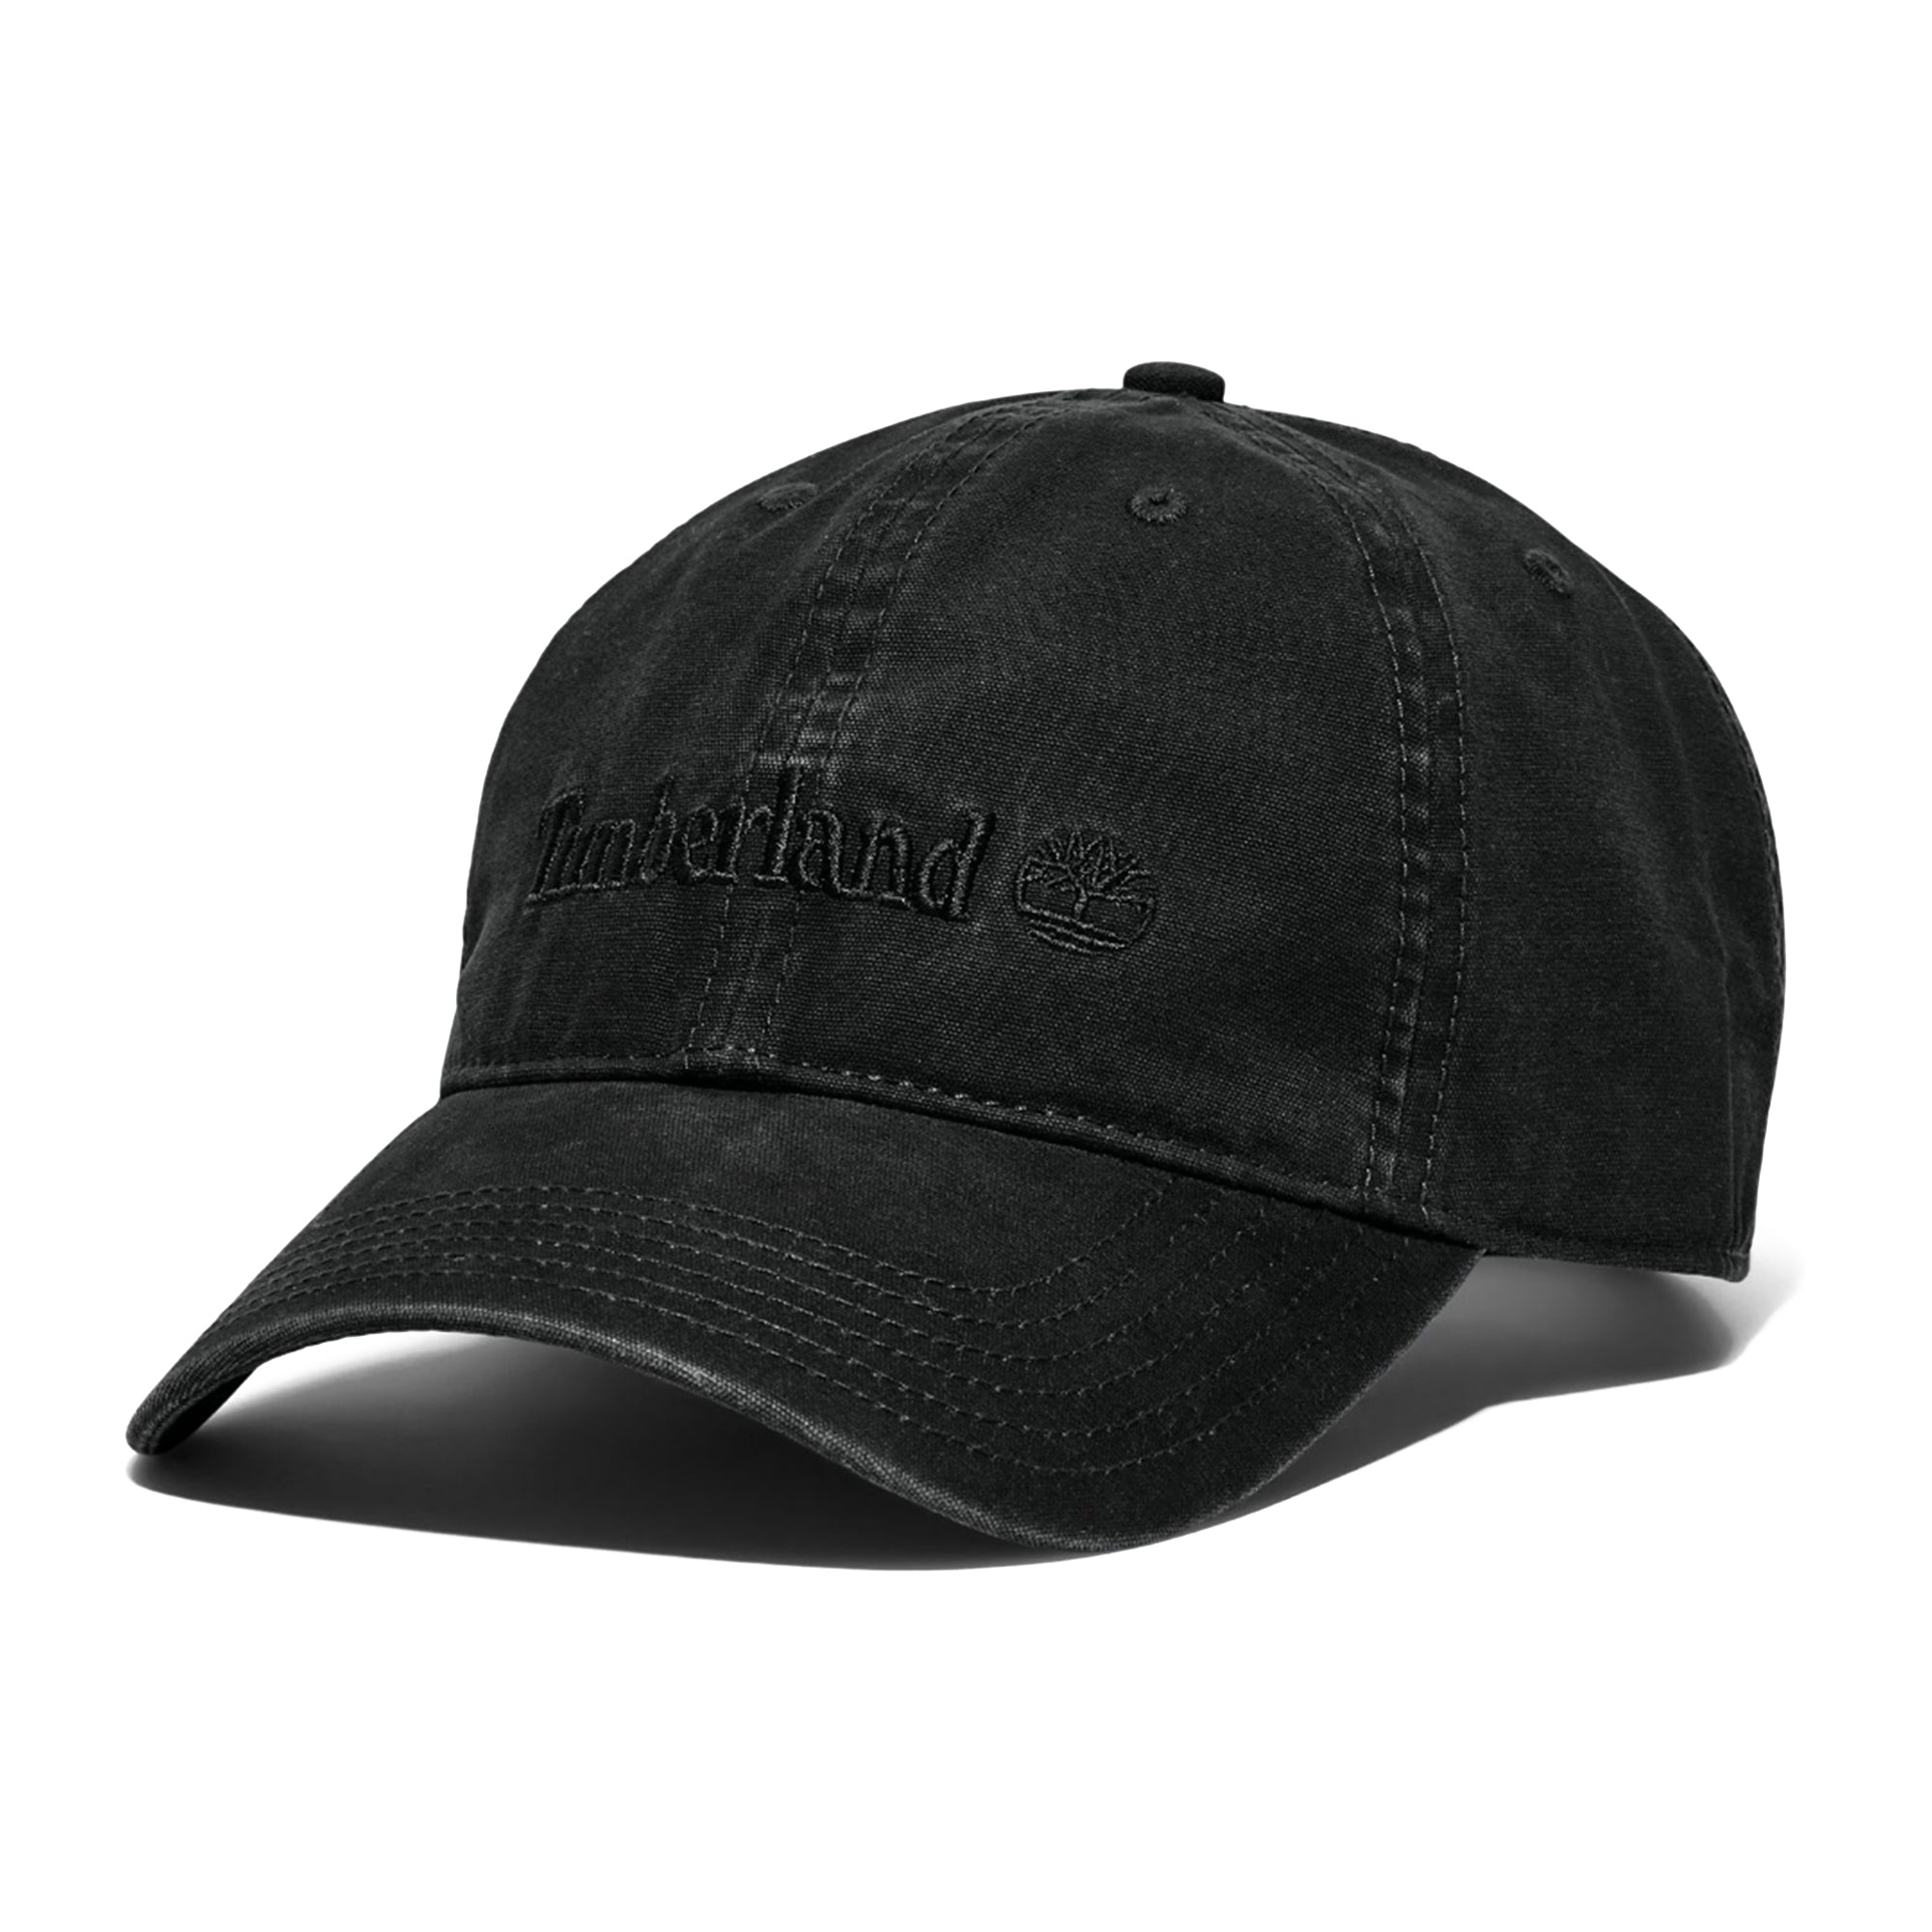 Timberland Baseball Cap - Black